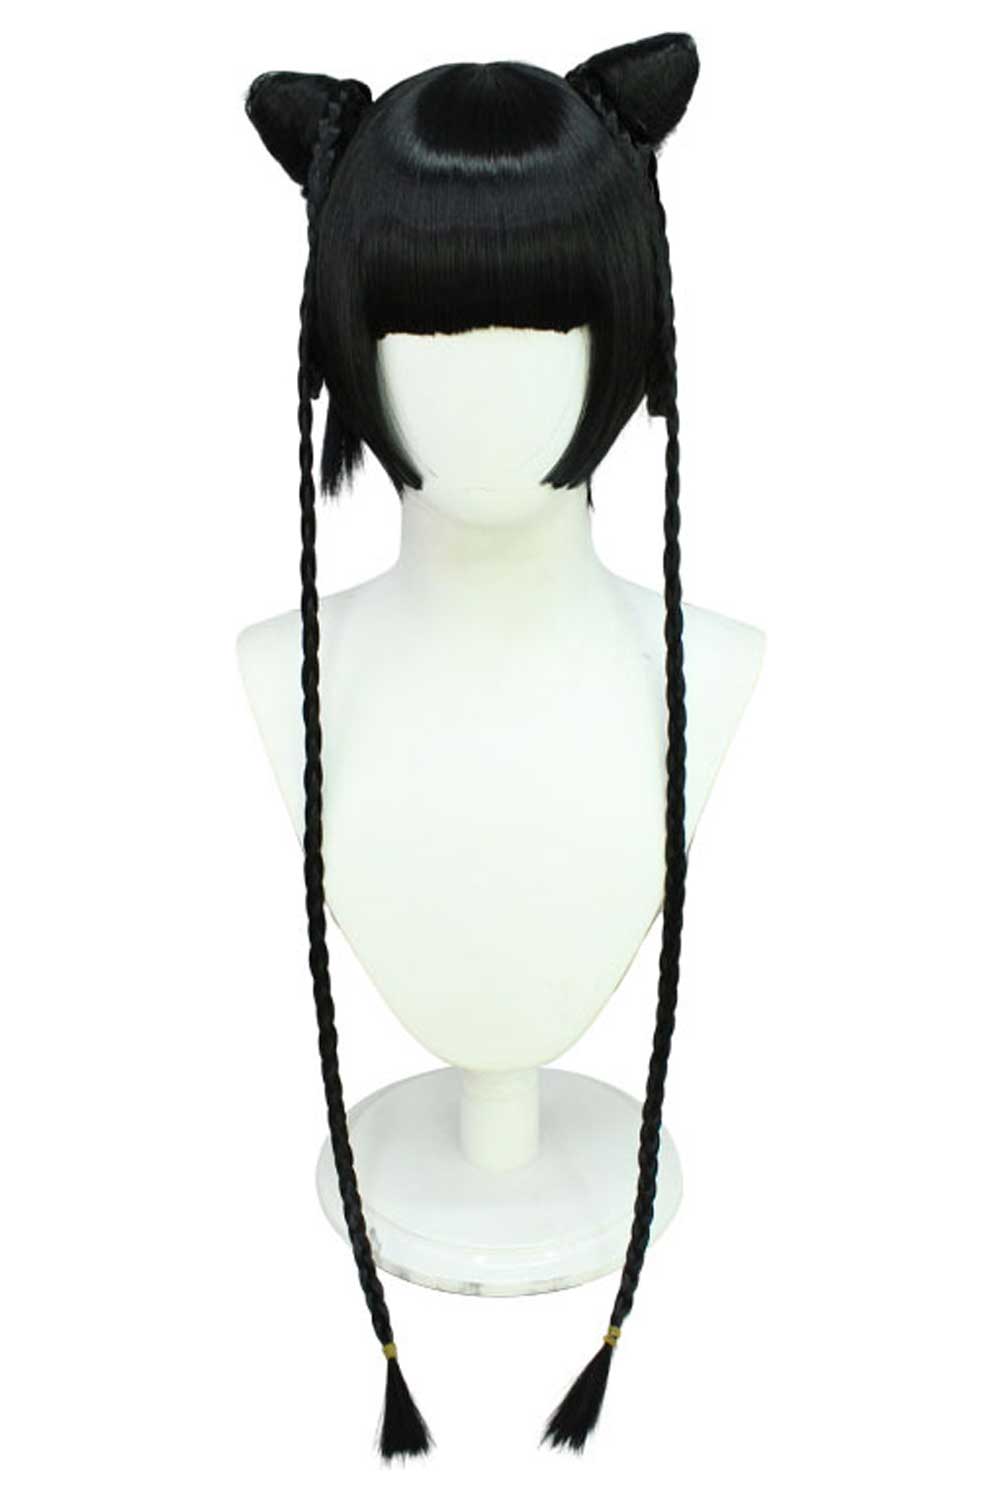 Anime Black Butler Ran Mao Cosplay Wig Heat Resistant Synthetic Hair Halloween Costume Accessories